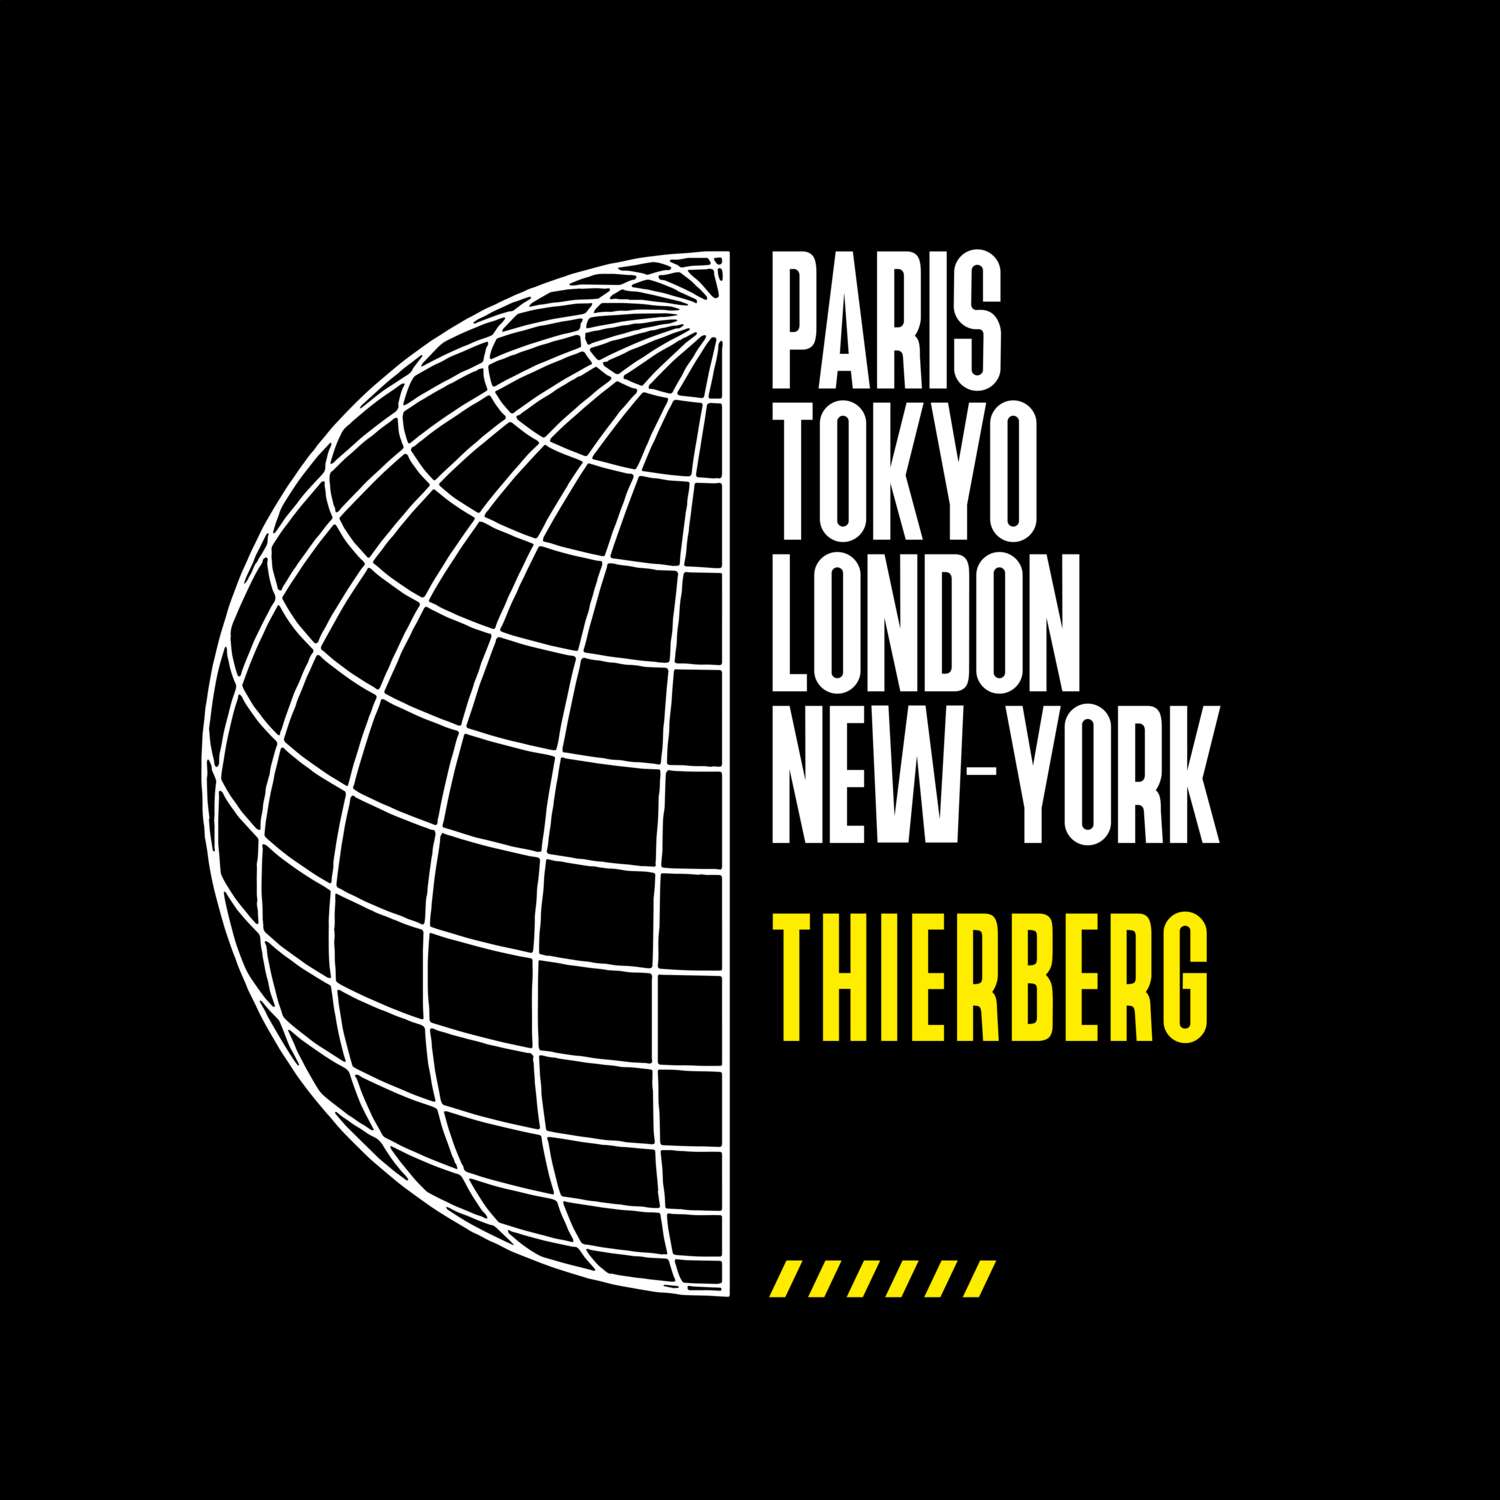 Thierberg T-Shirt »Paris Tokyo London«